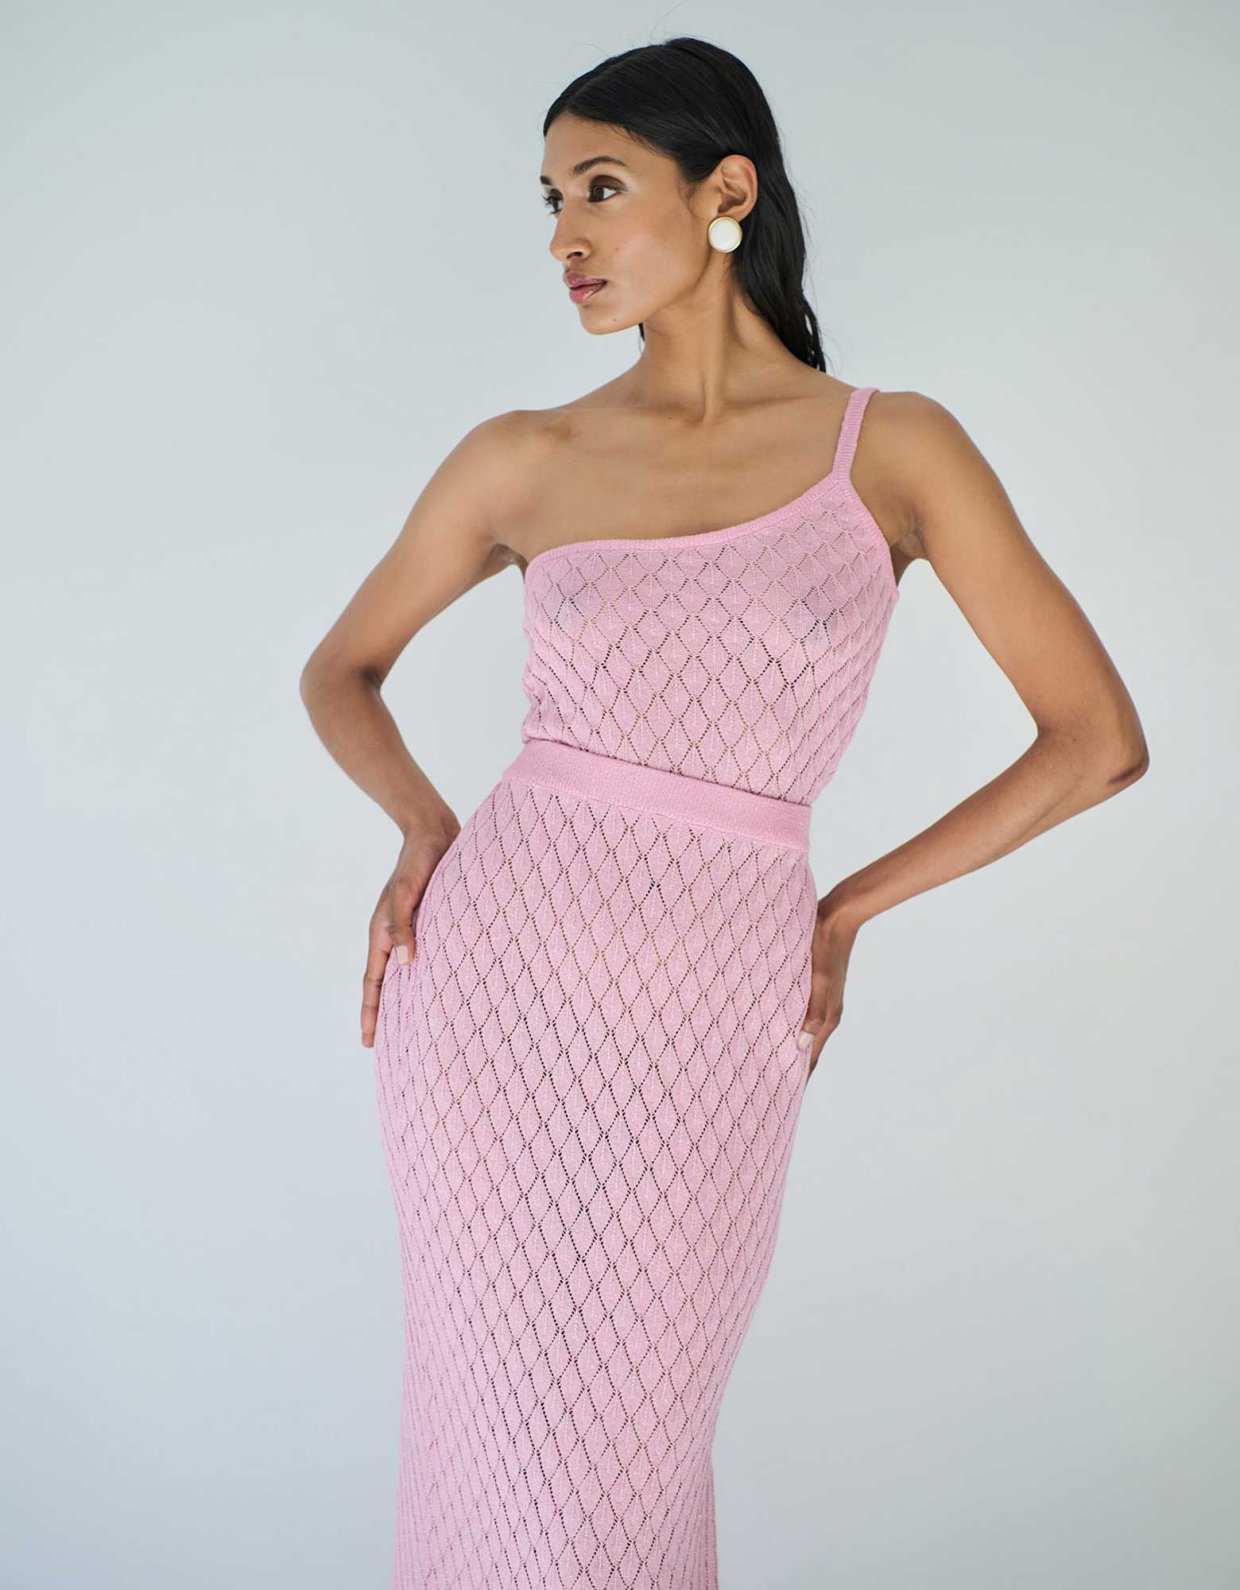 Combos Knitwear One shoulder lurex top pink